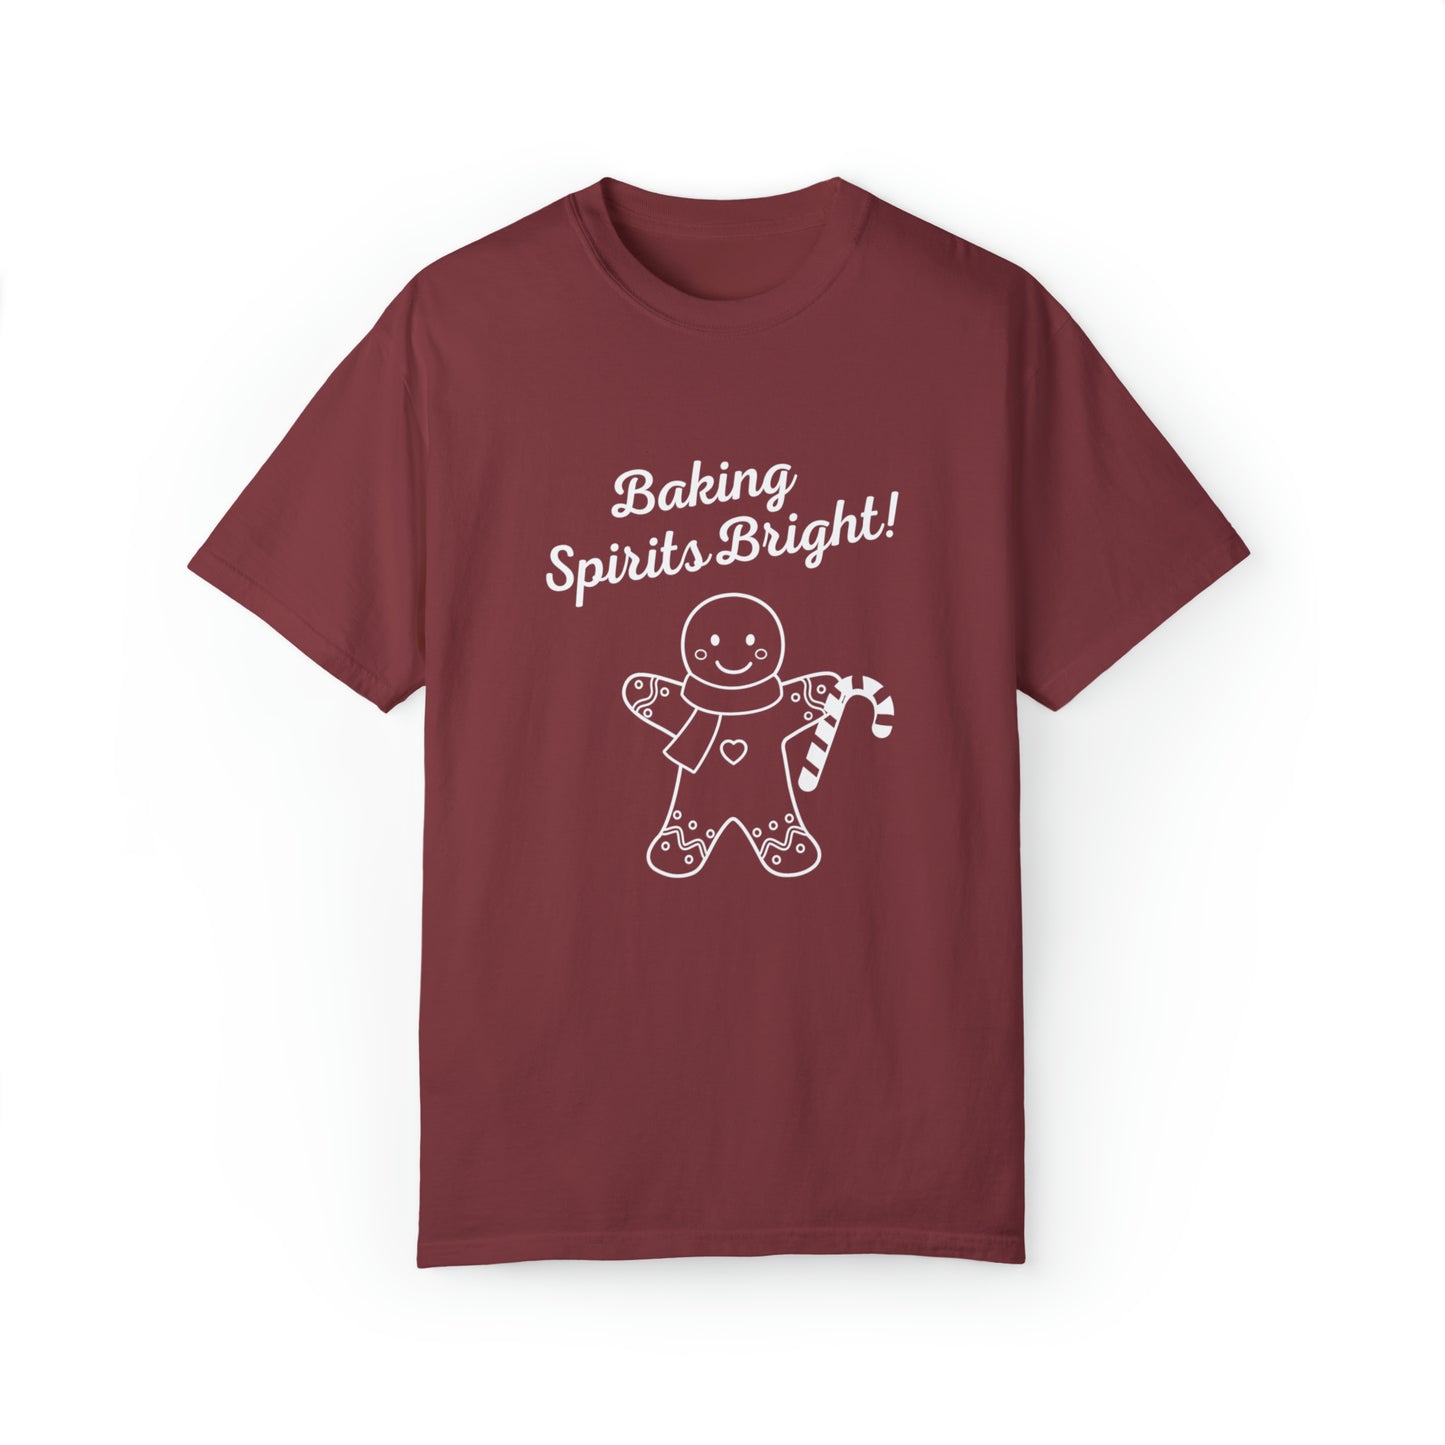 Baking Spirits Bright Unisex Garment-Dyed T-shirt